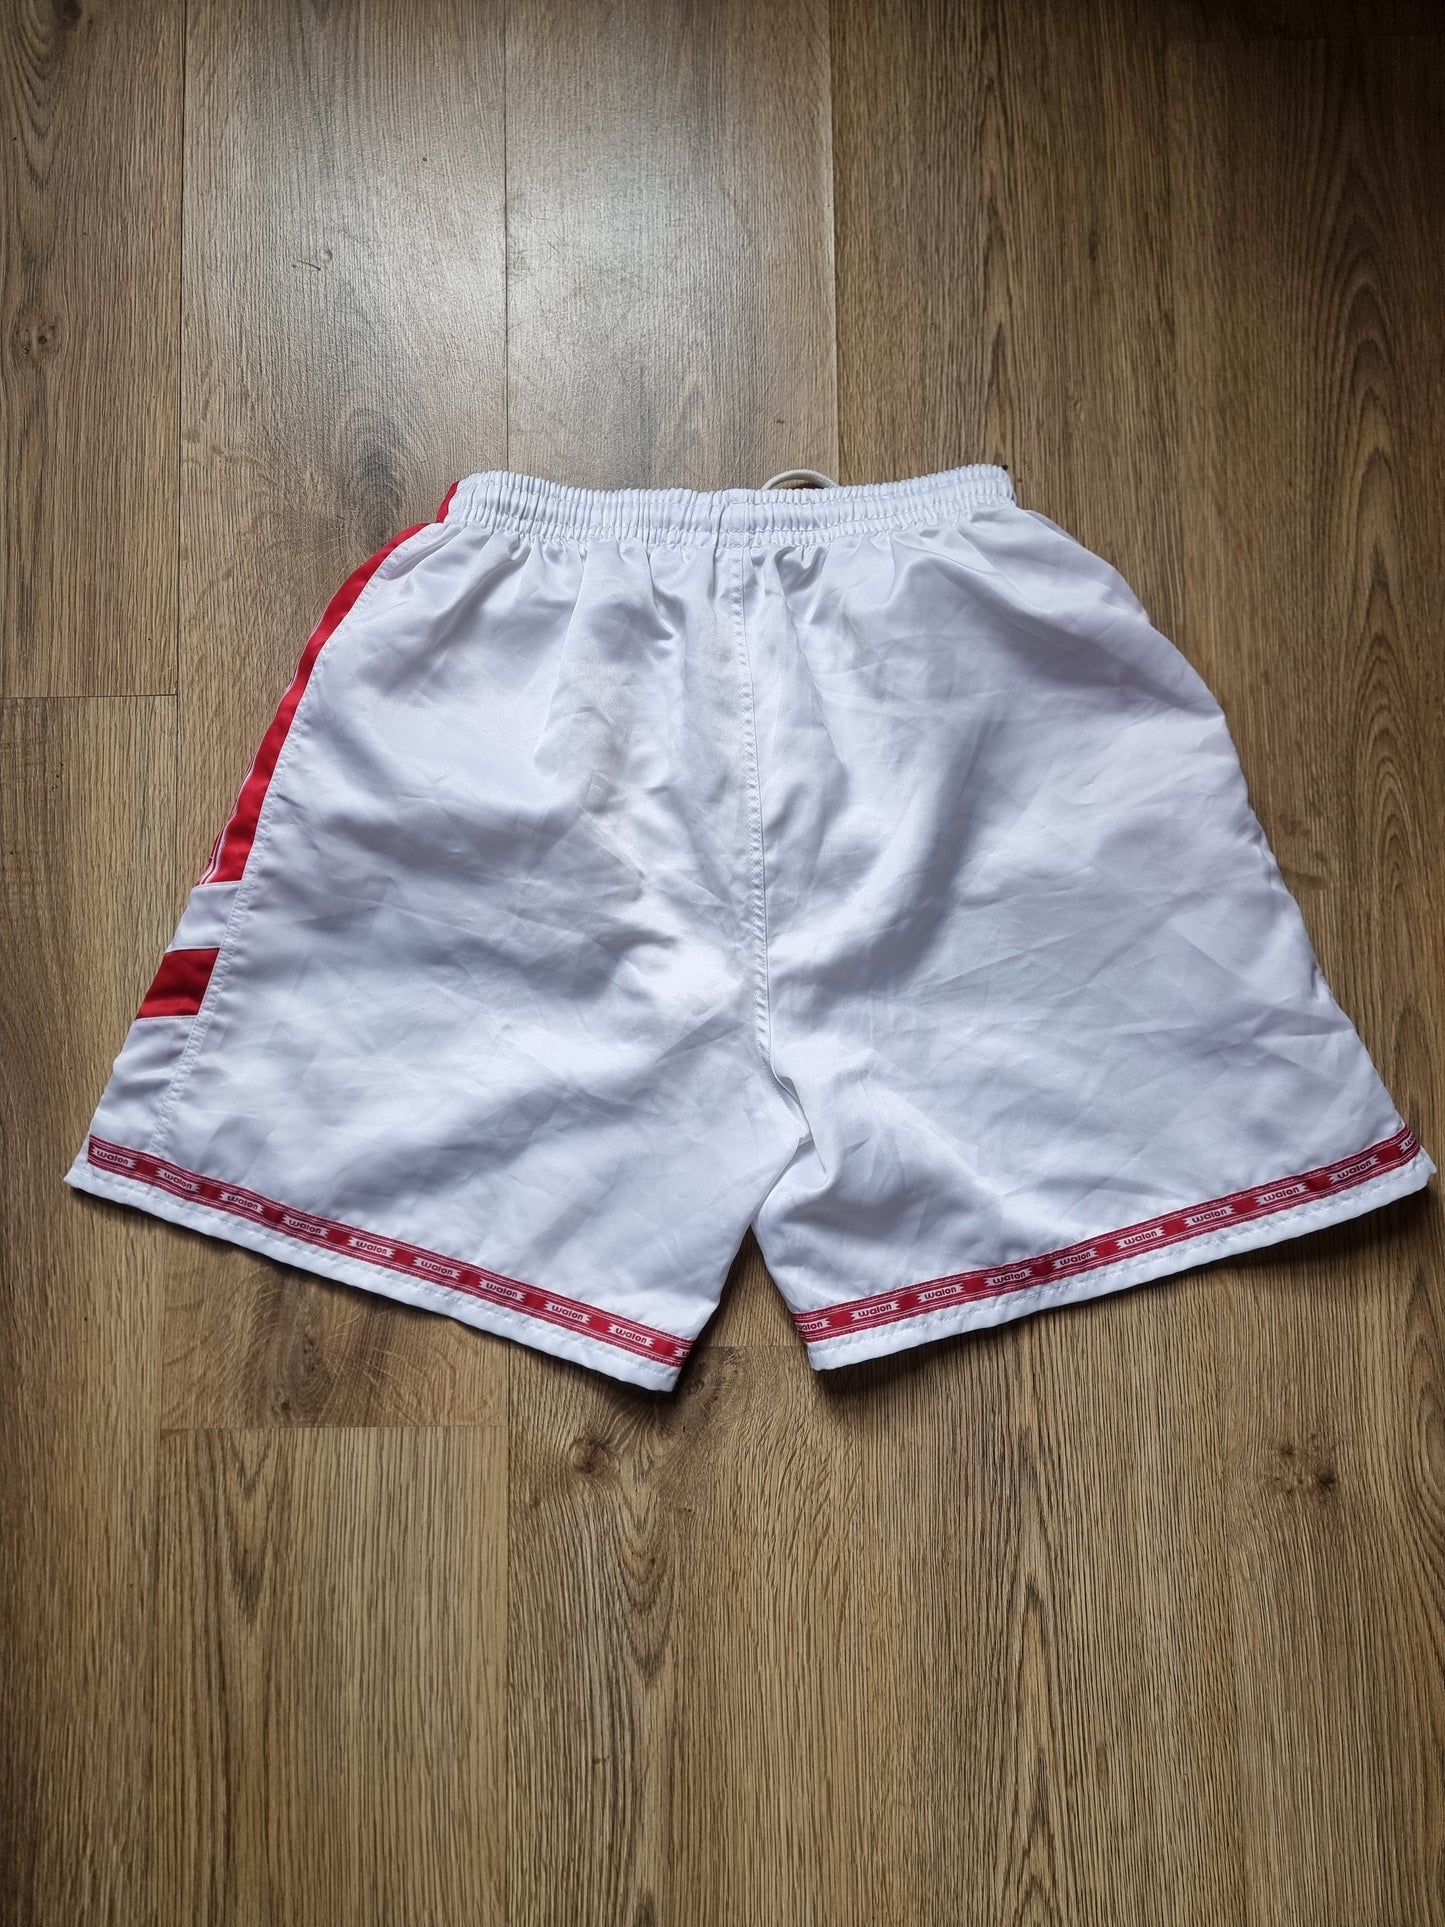 Walon 90s Football Shorts XL